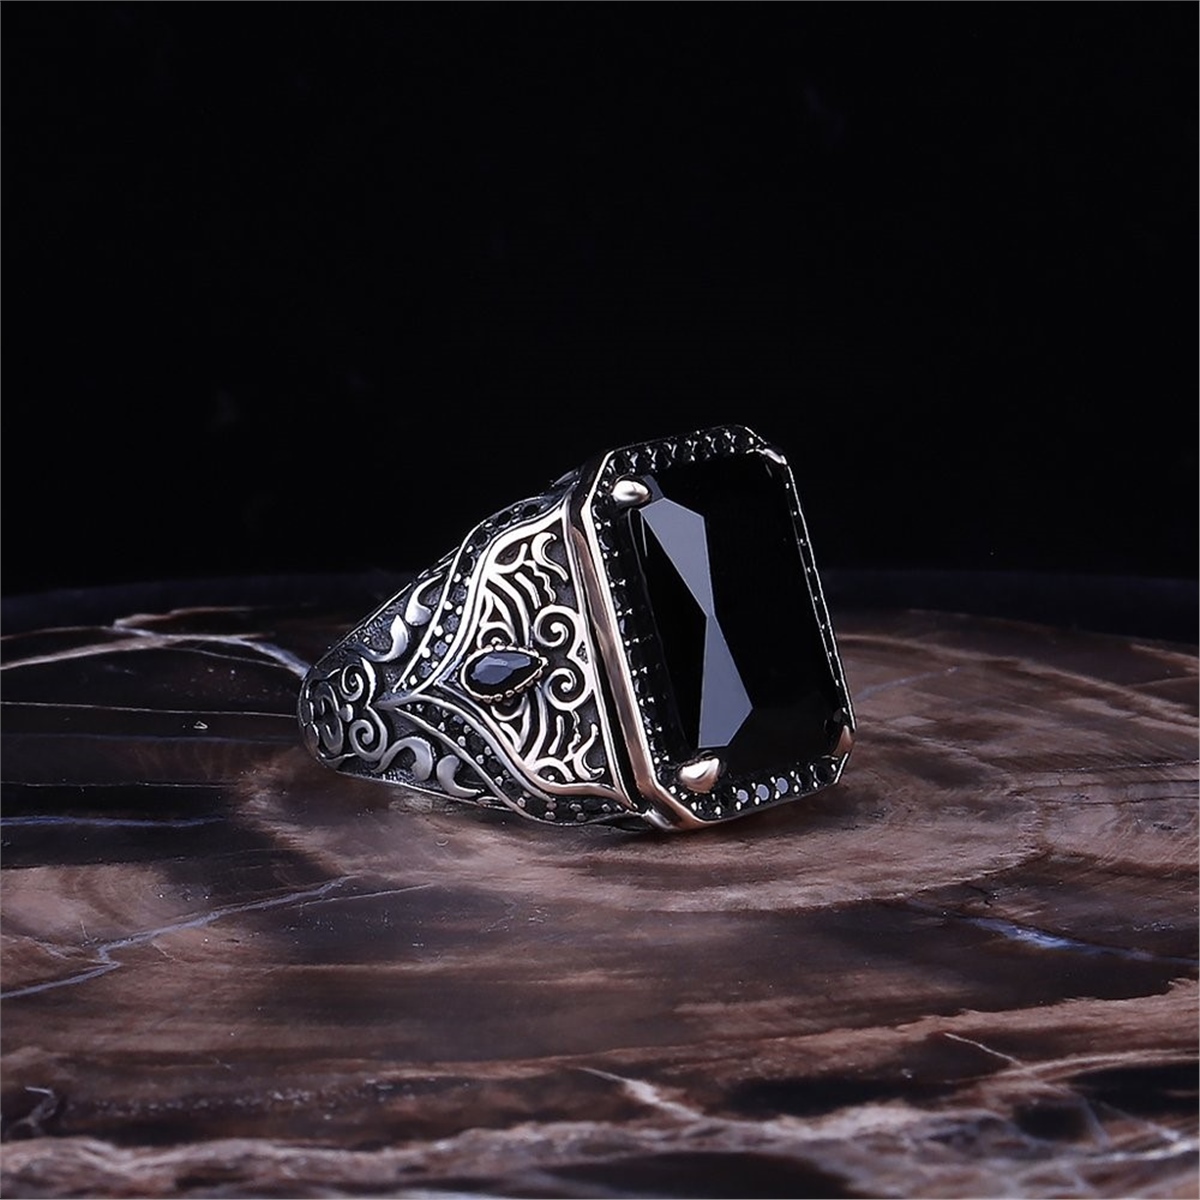 Zircon Stone 925 Sterling Silver Men's Ring